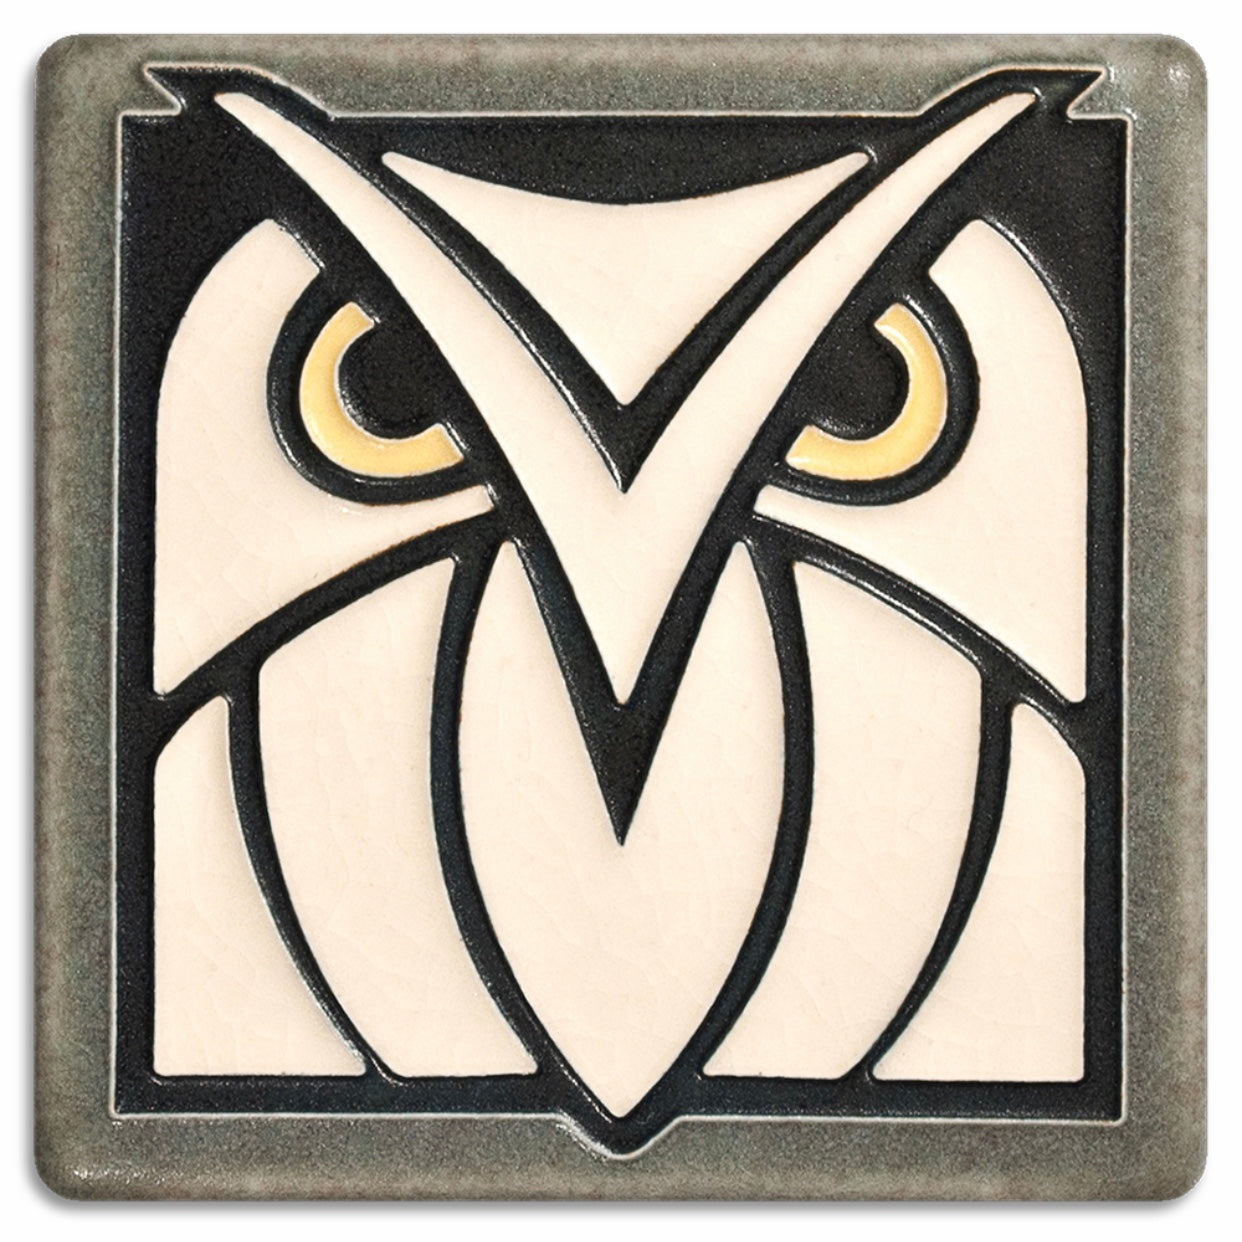 ceramic decorative owl tile